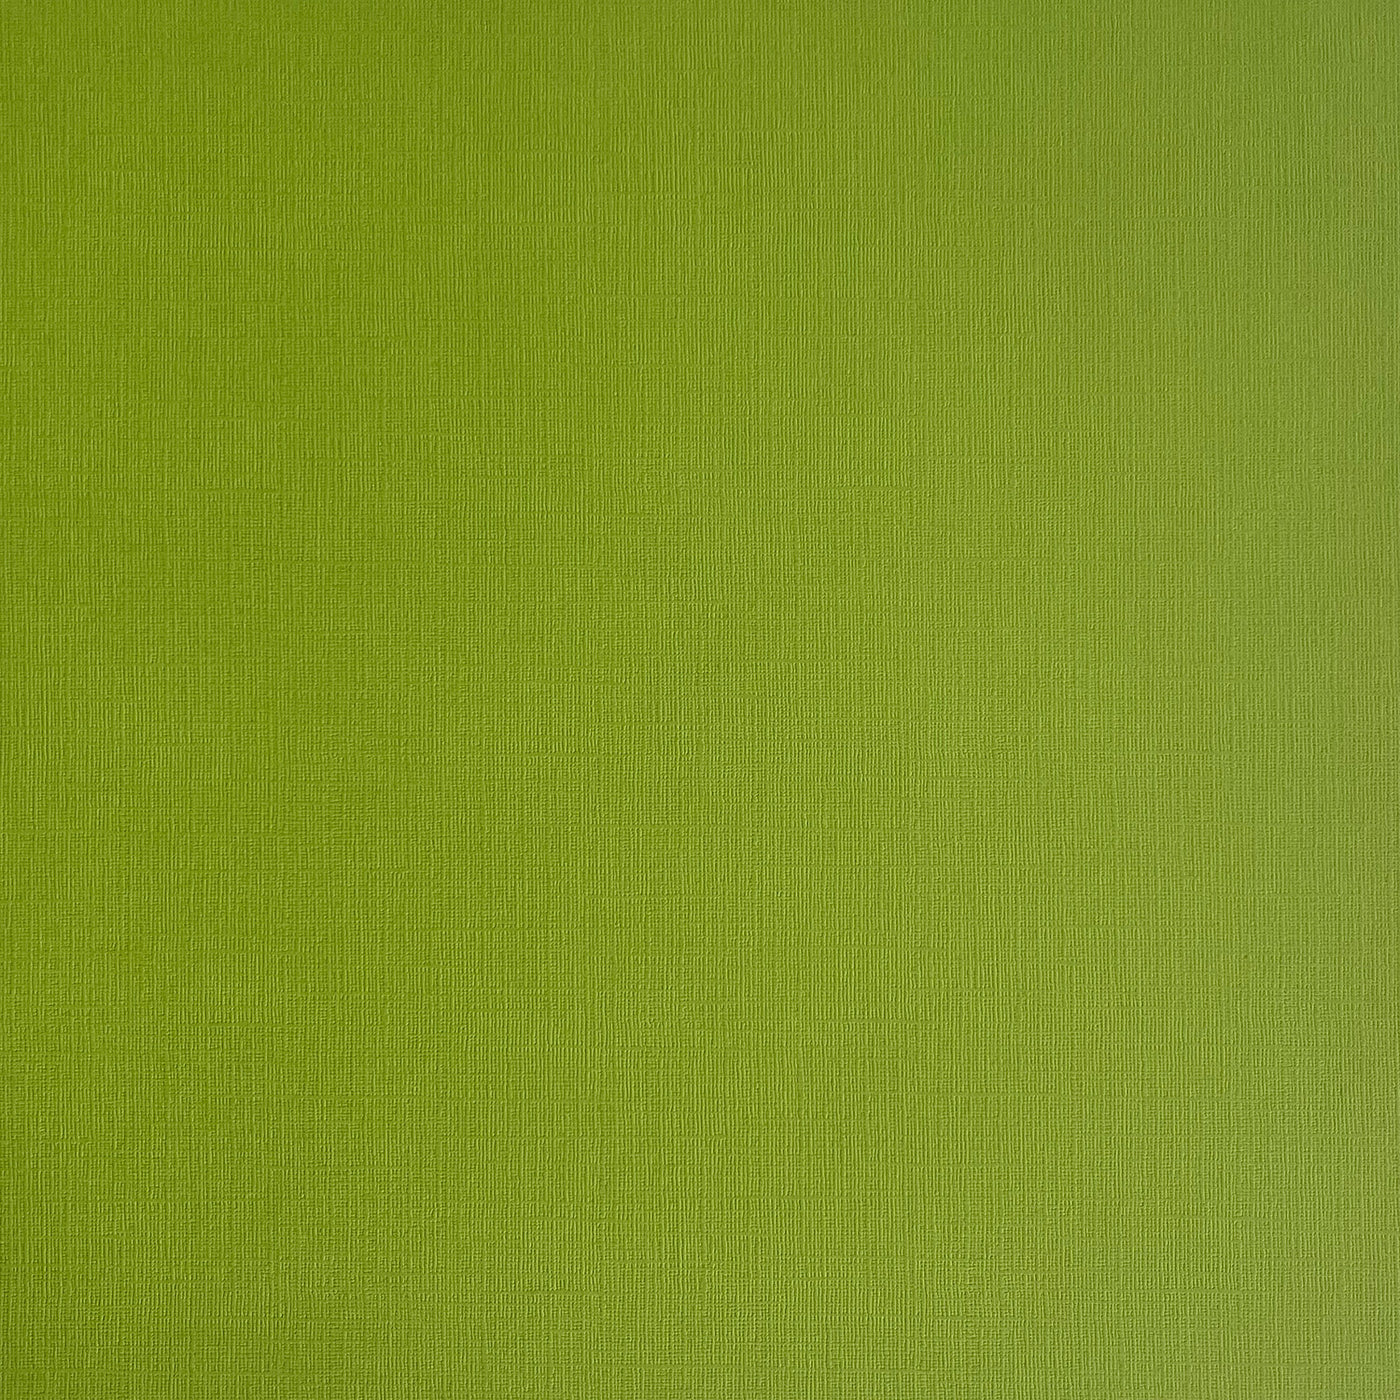 Mint Julep - Textured 12x12 Cardstock - Spring green canvas scrapbook paper